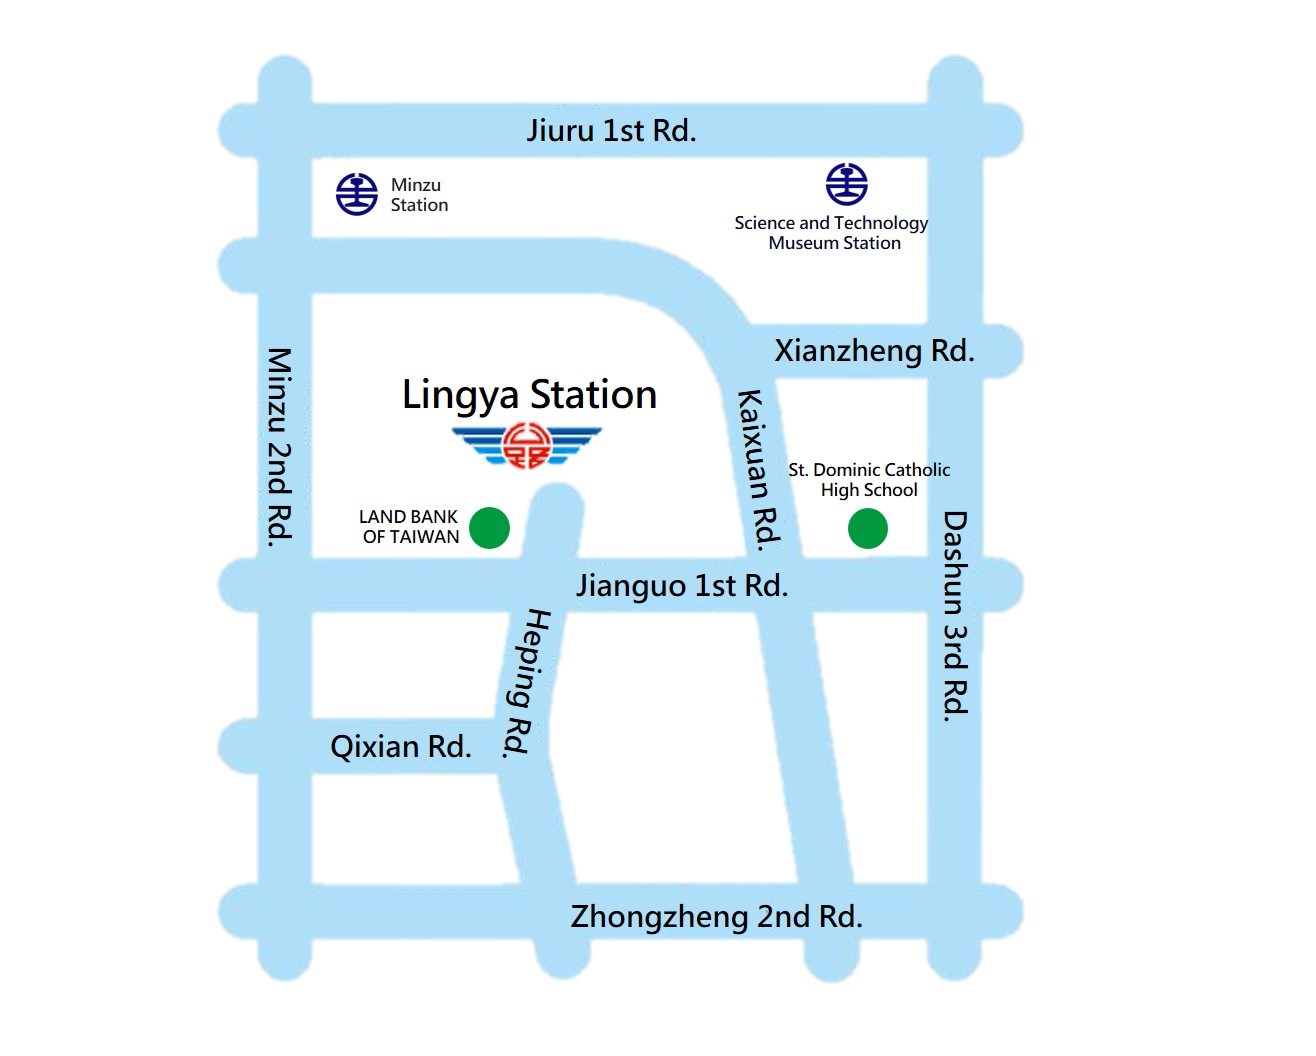  Lingya Station